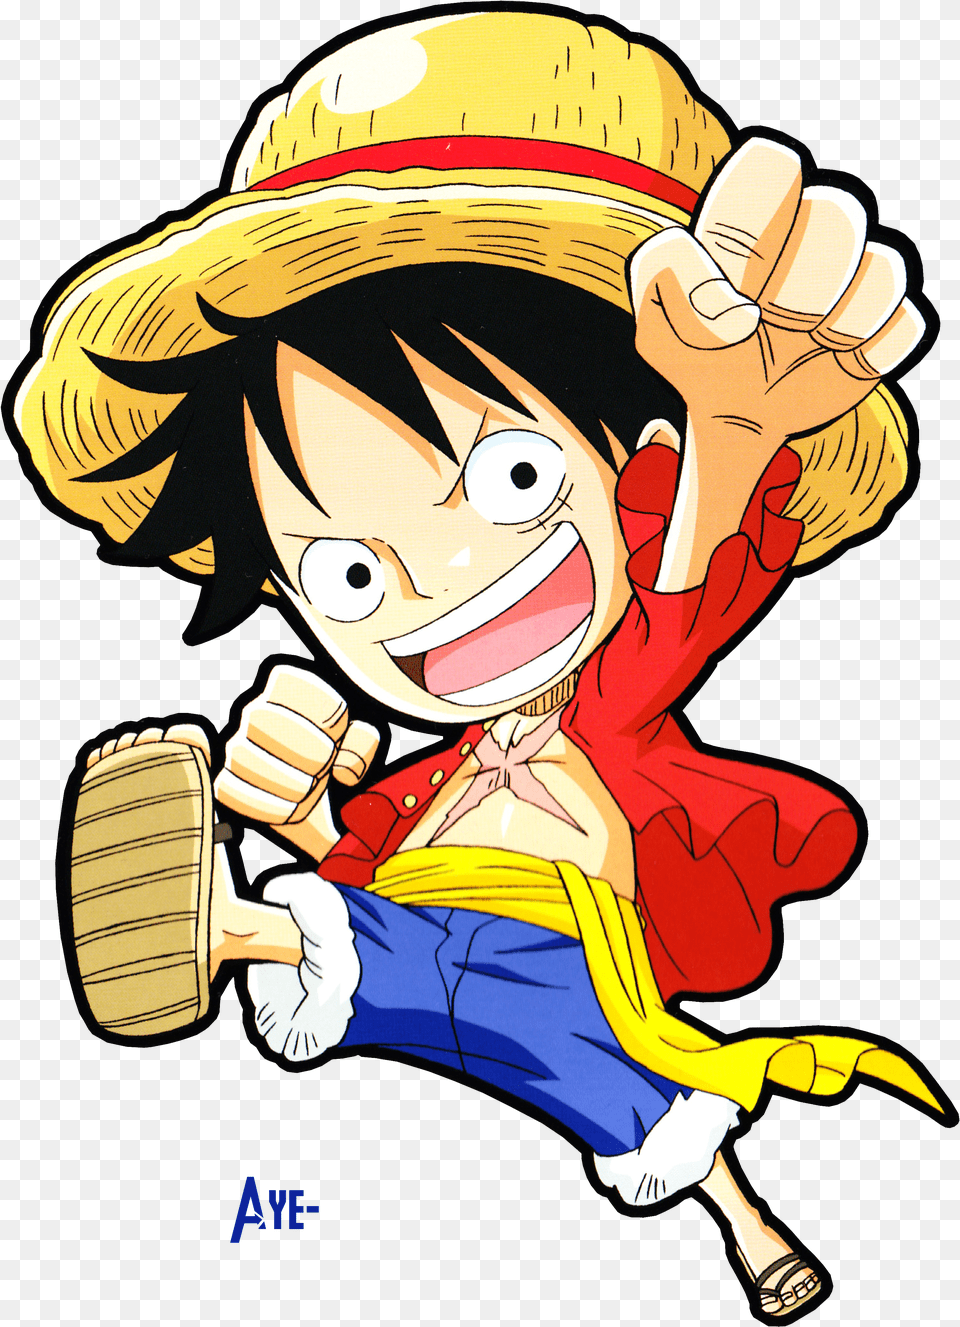 One Piece Luffy Chibi Png Image